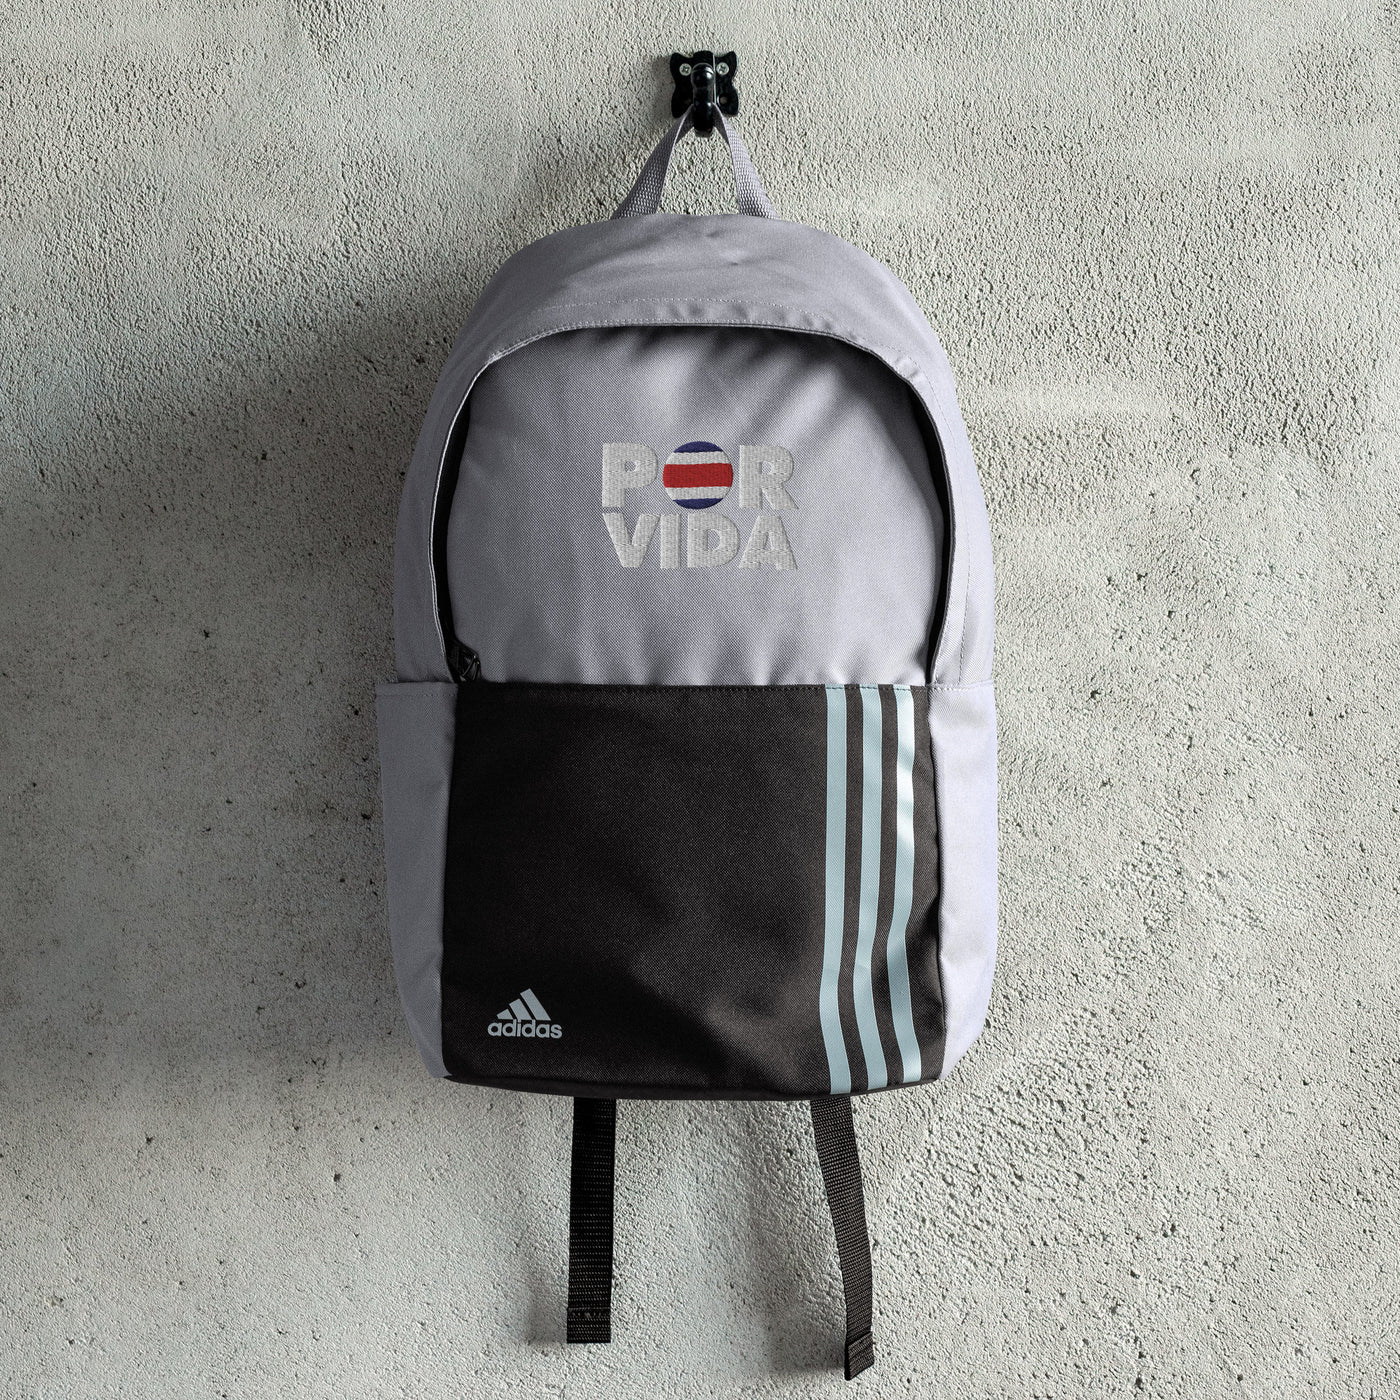 Costa Rica POR VIDA adidas backpack